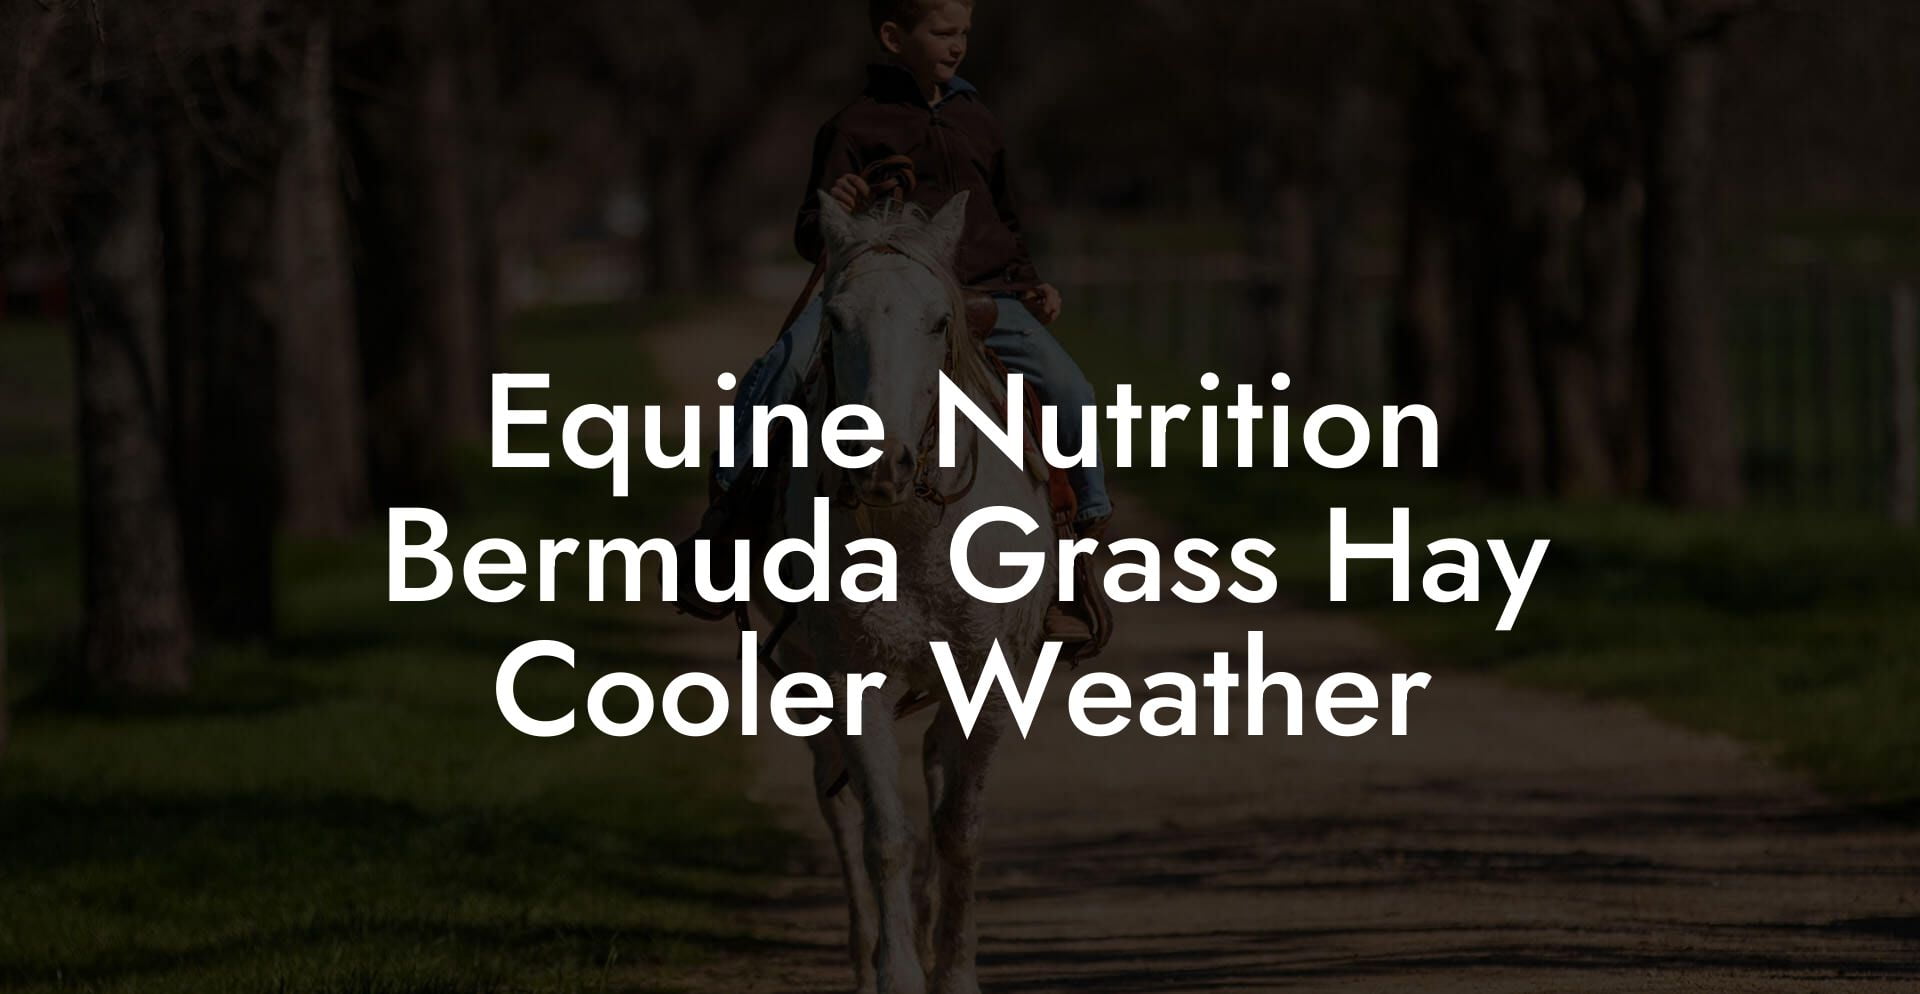 Equine Nutrition Bermuda Grass Hay Cooler Weather